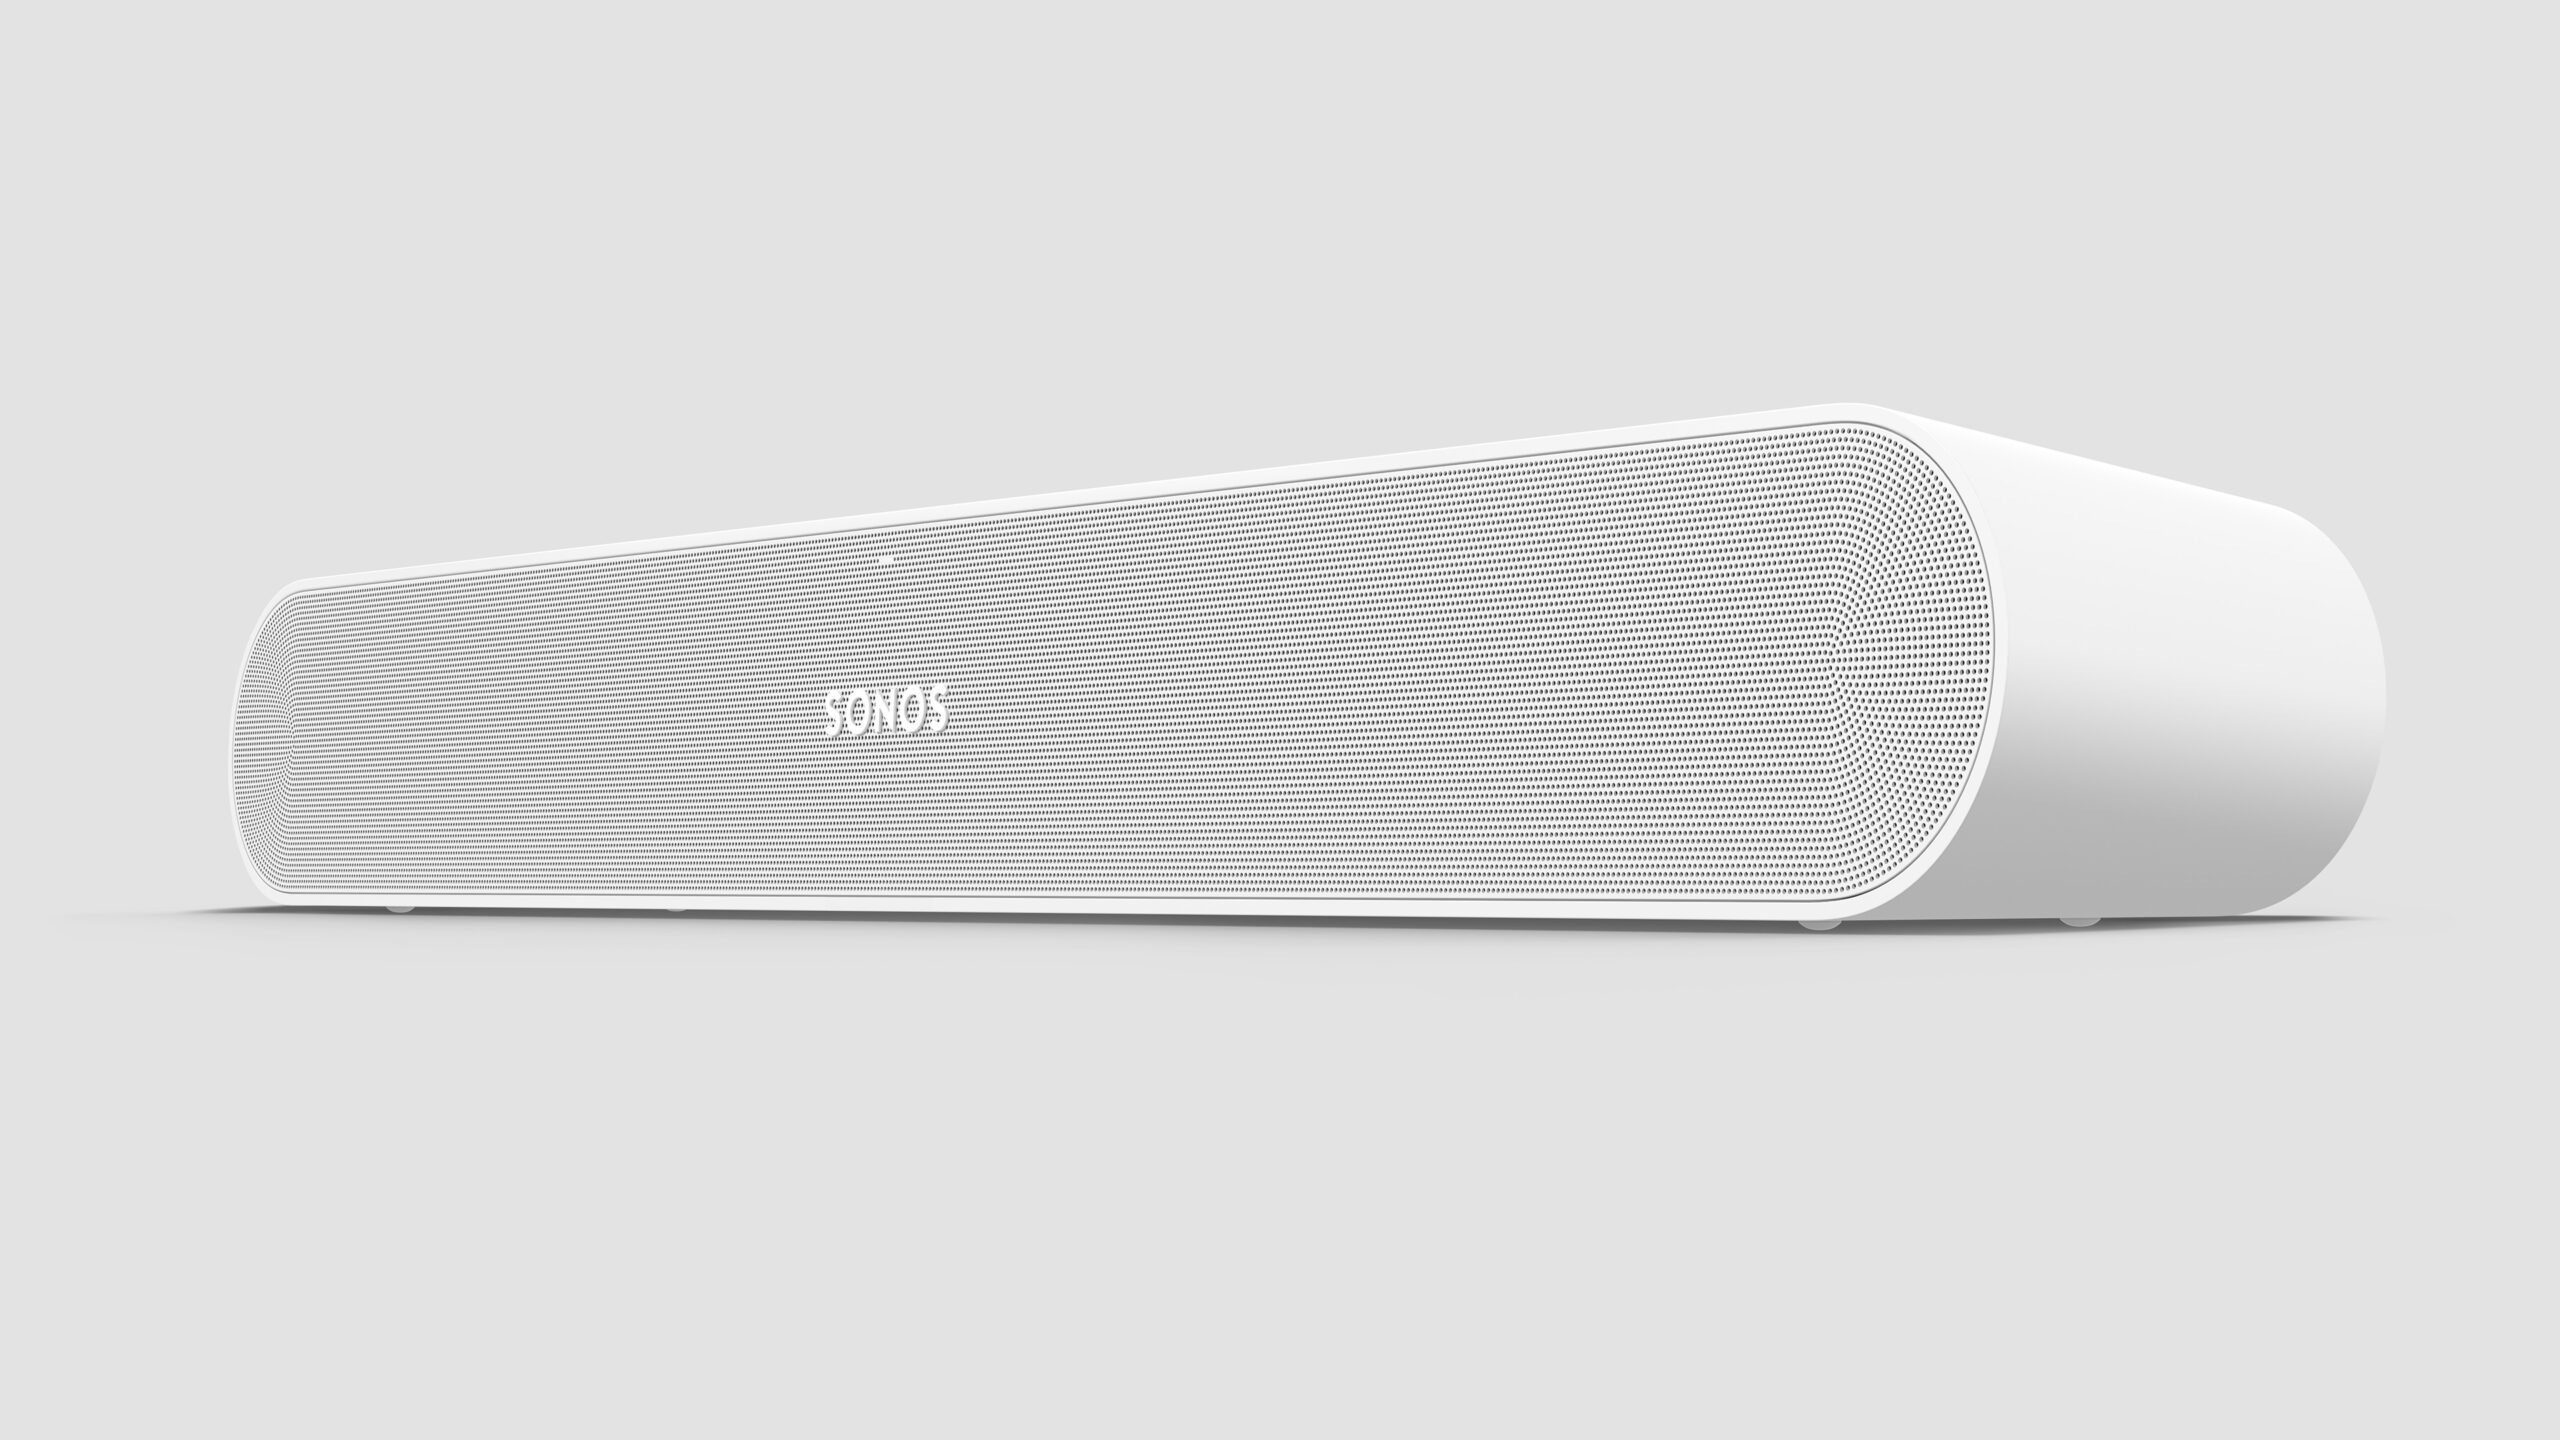 Sonos ray side white